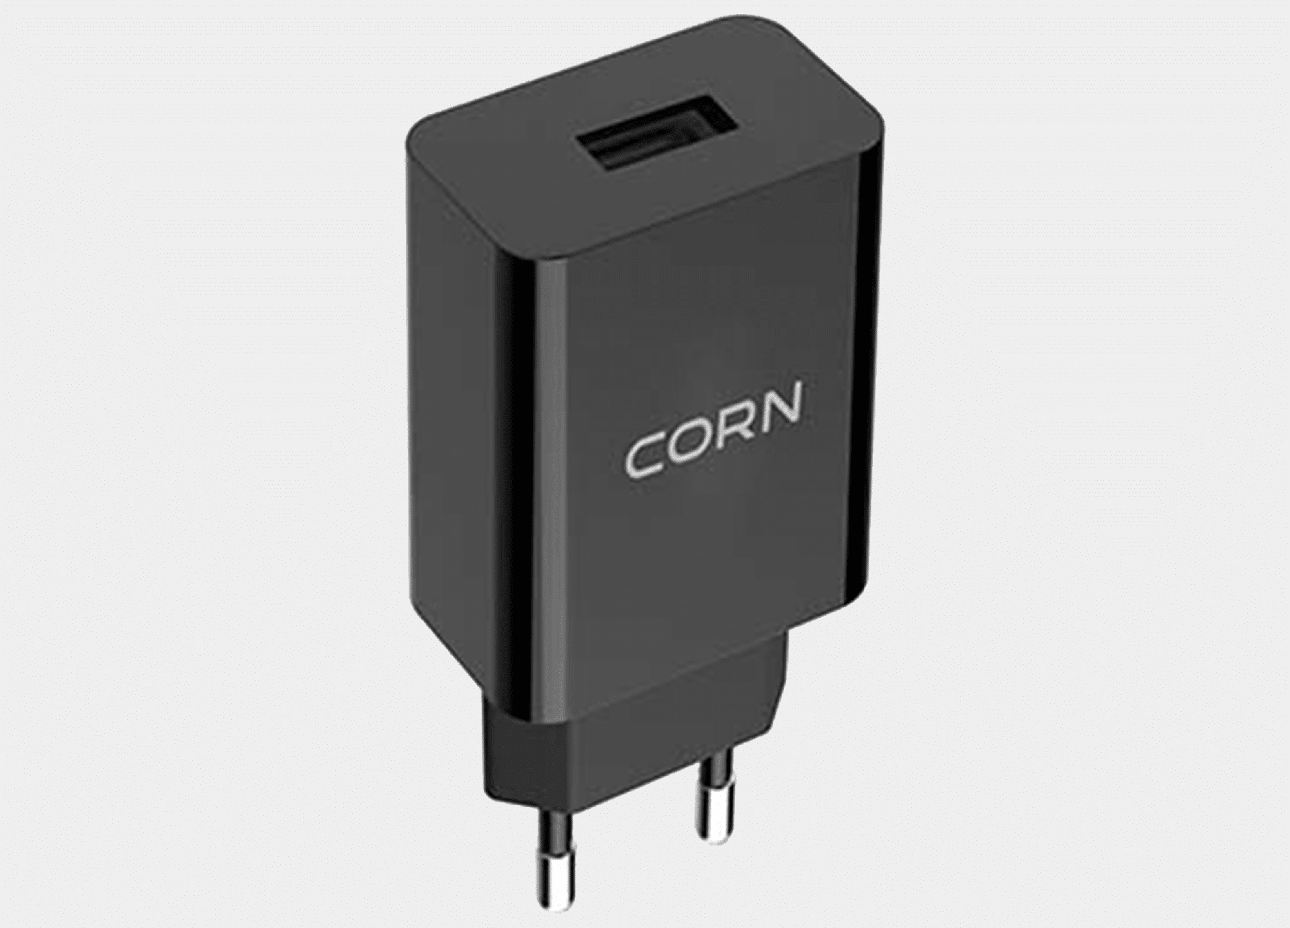 CORN Power Cube QE020 MG